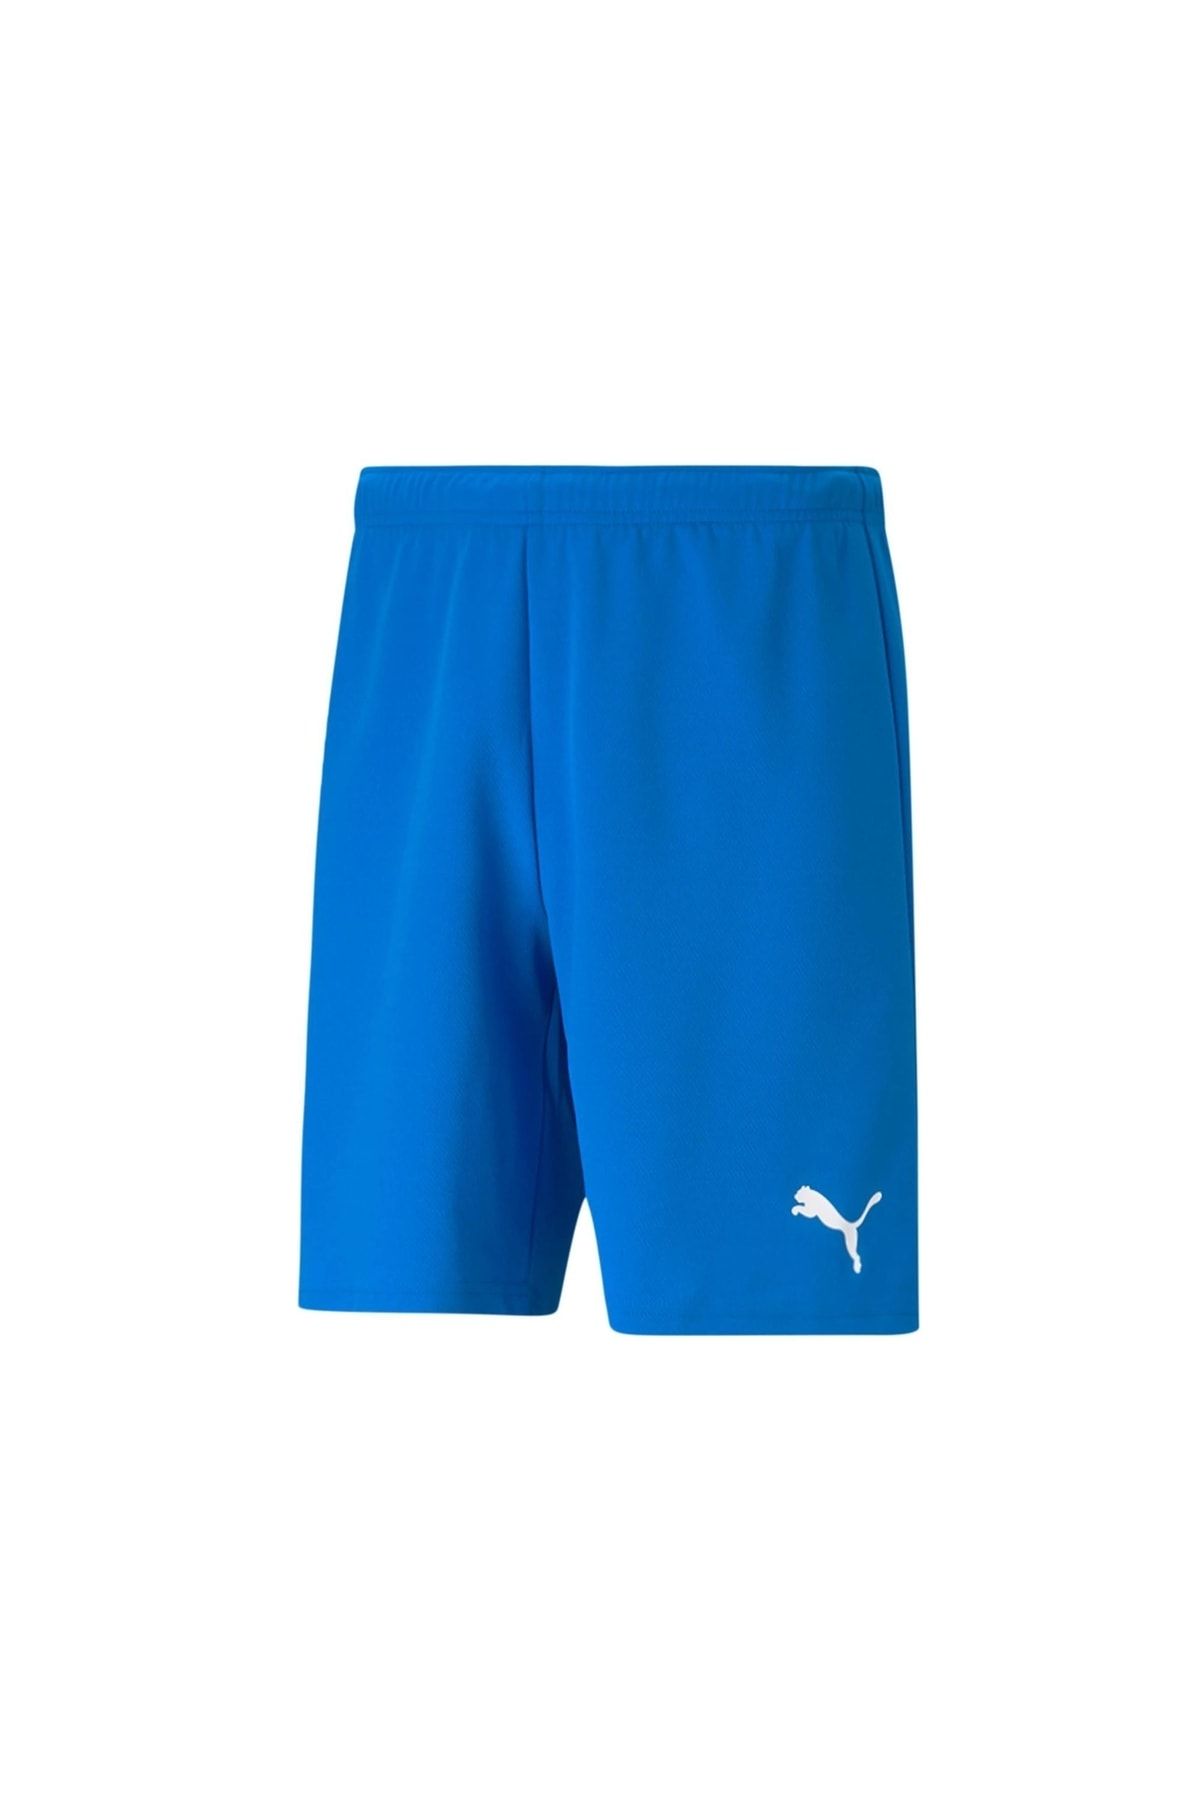 Puma Sports Shorts - Blue - Trendyol